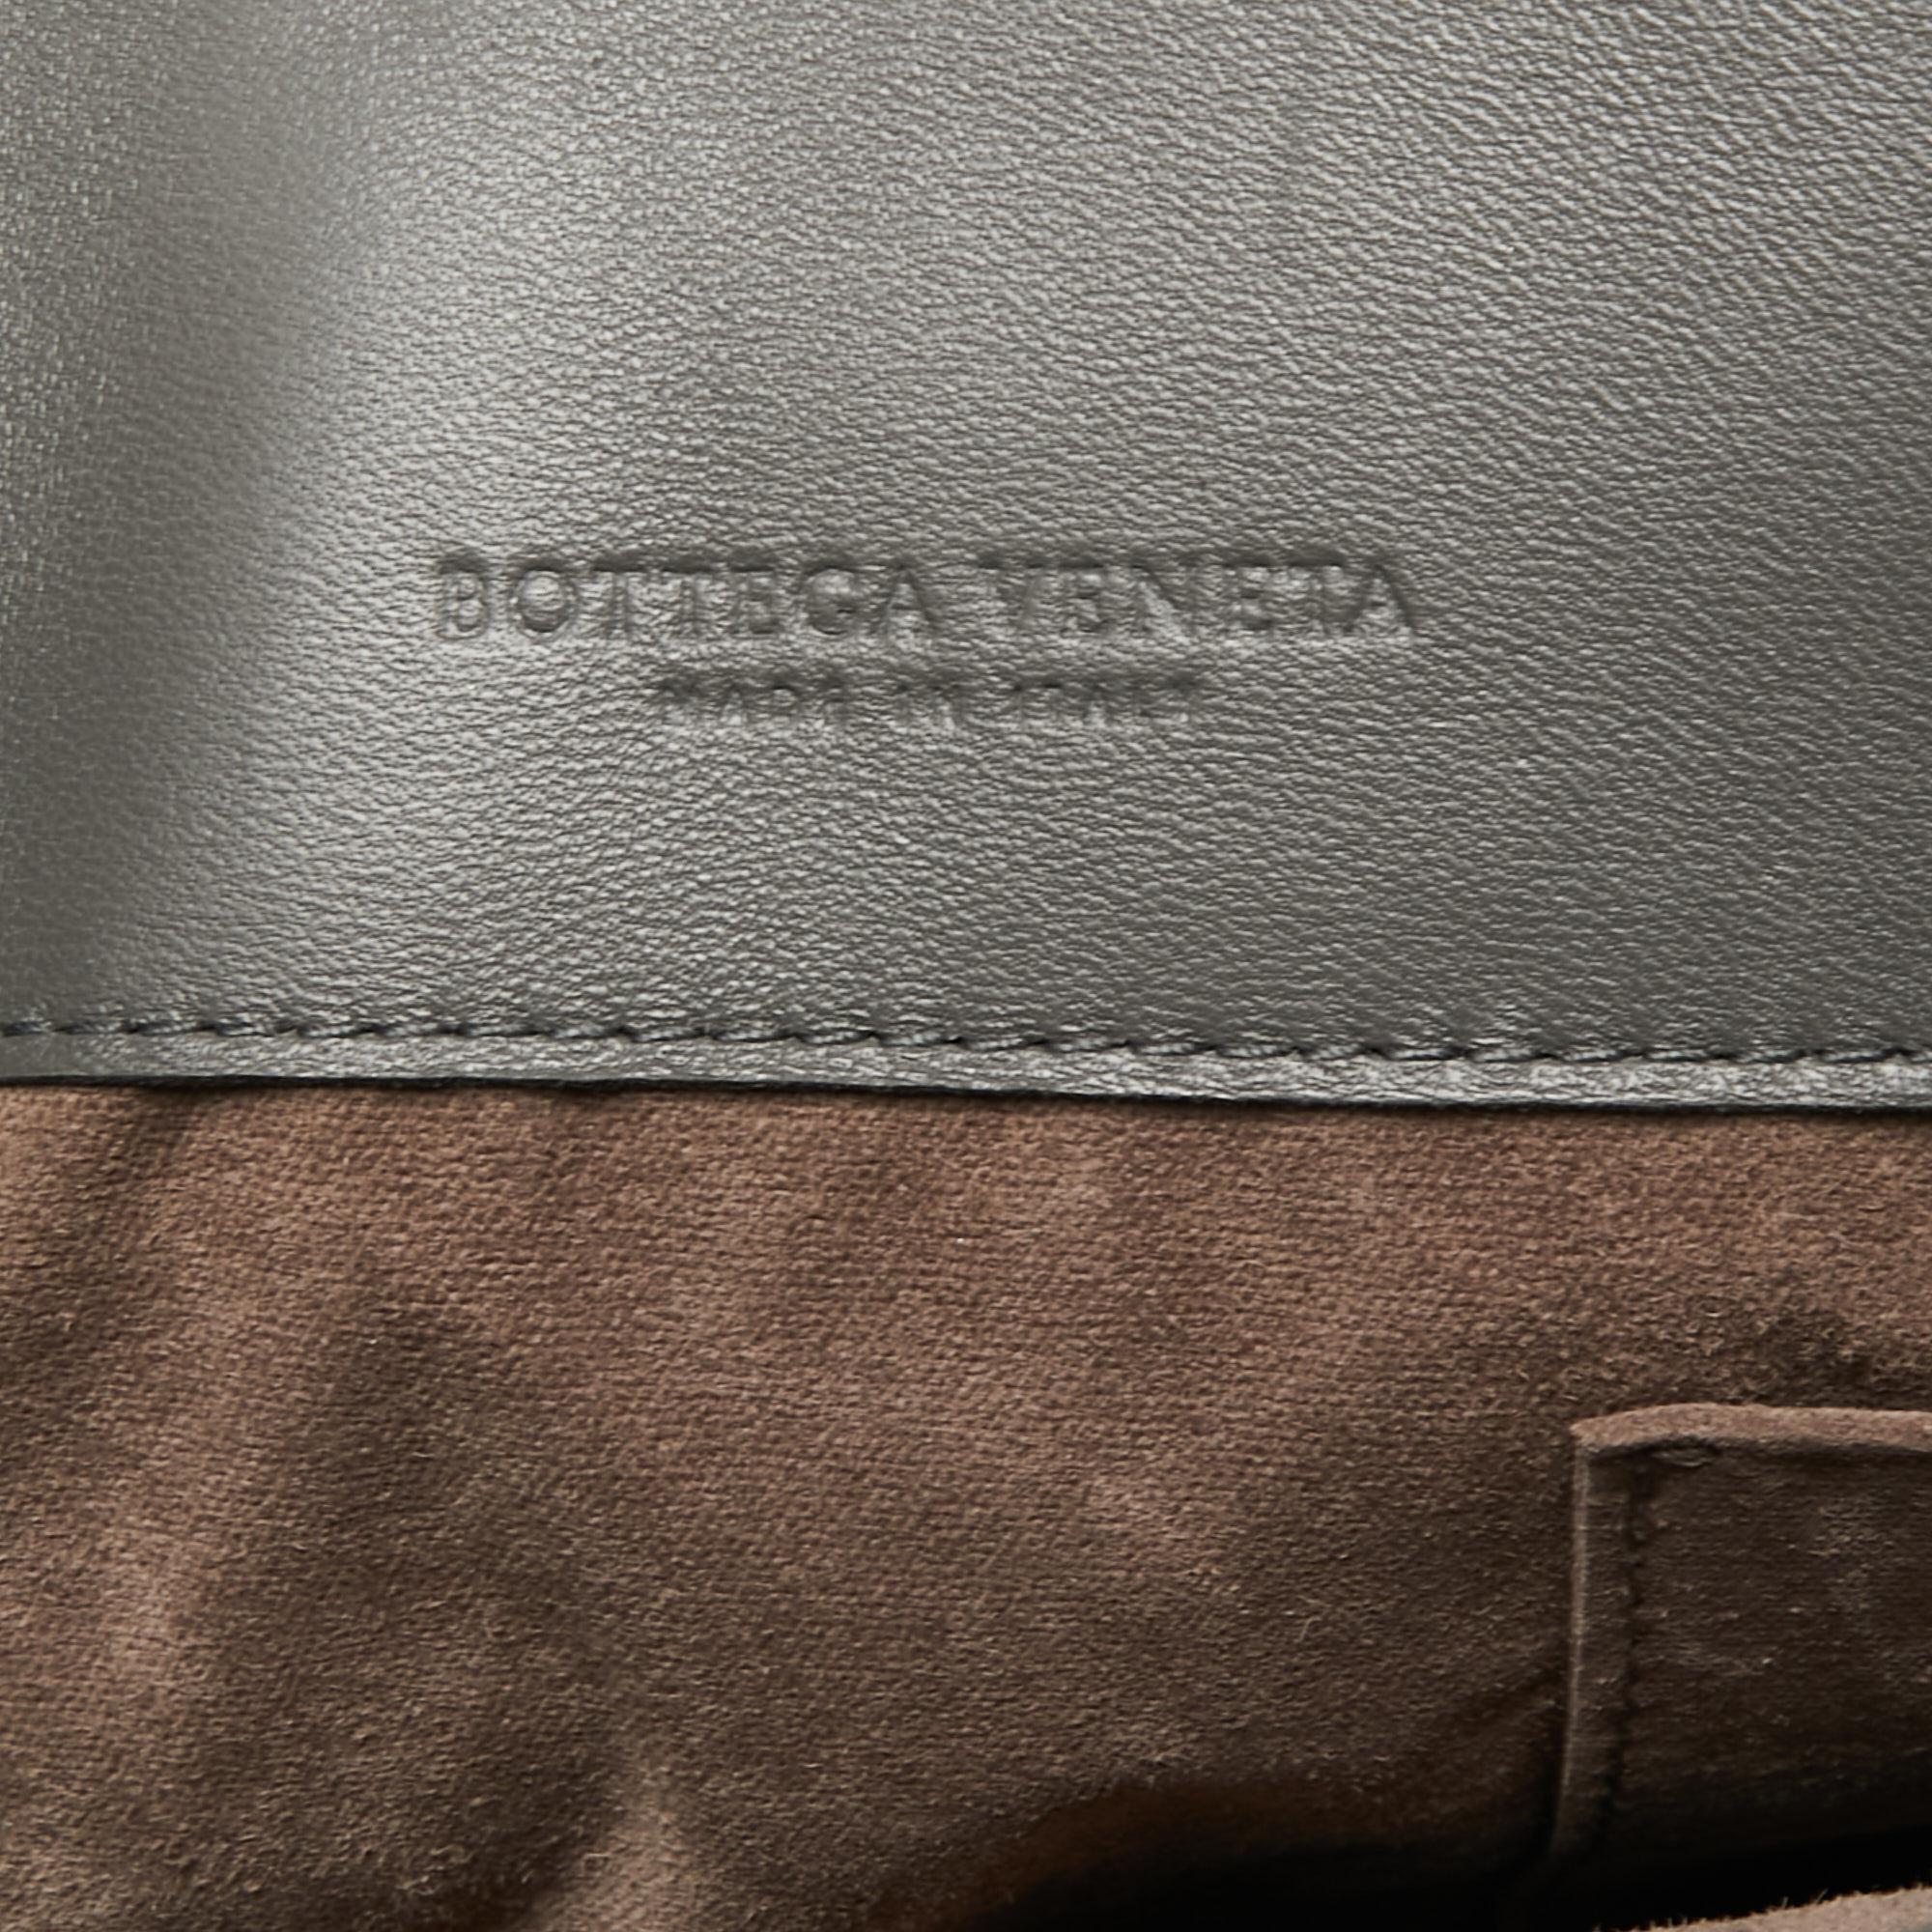 Bottega Veneta Grey Intrecciato Leather Olimpia Bag 3